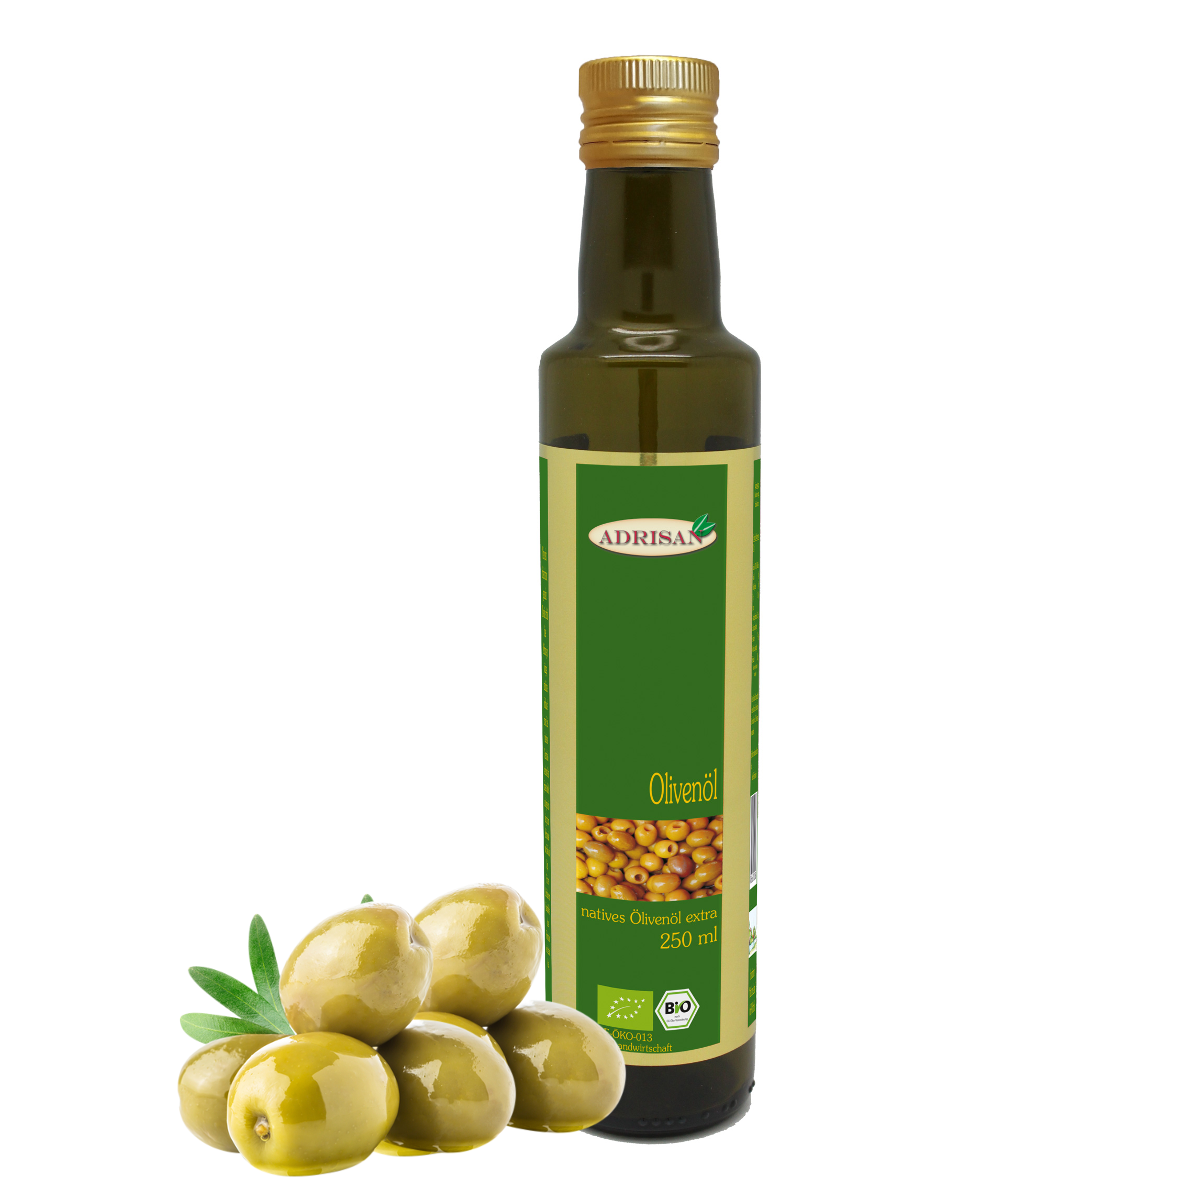 Adrisan Olivenöl extra nativ bio* 750 ml